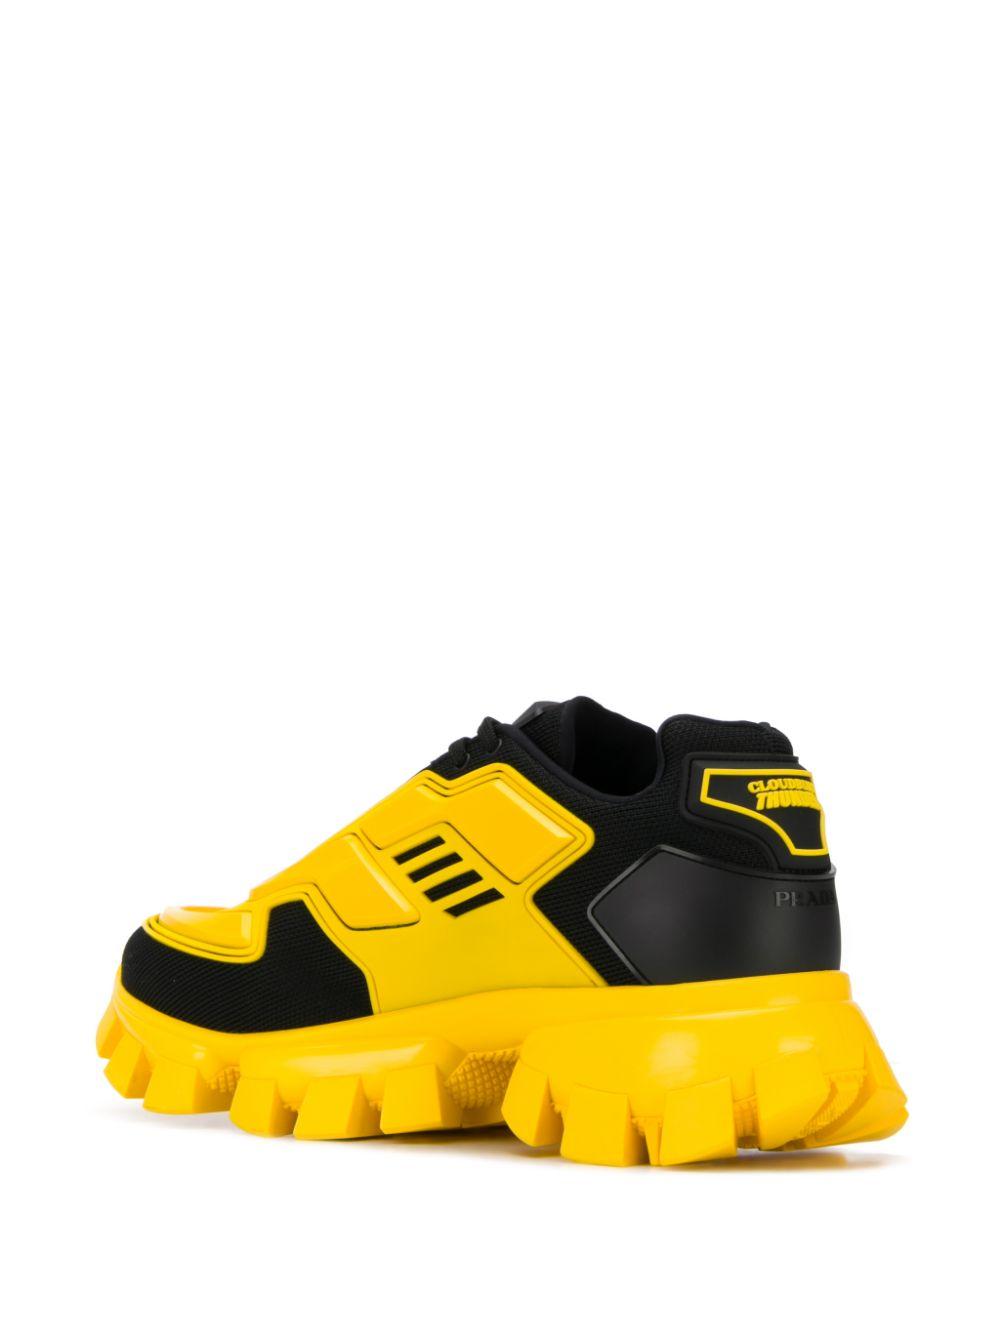 Prada Rubber Cloudbust Thunder Sneakers in Black/Yellow (Yellow) for Men |  Lyst